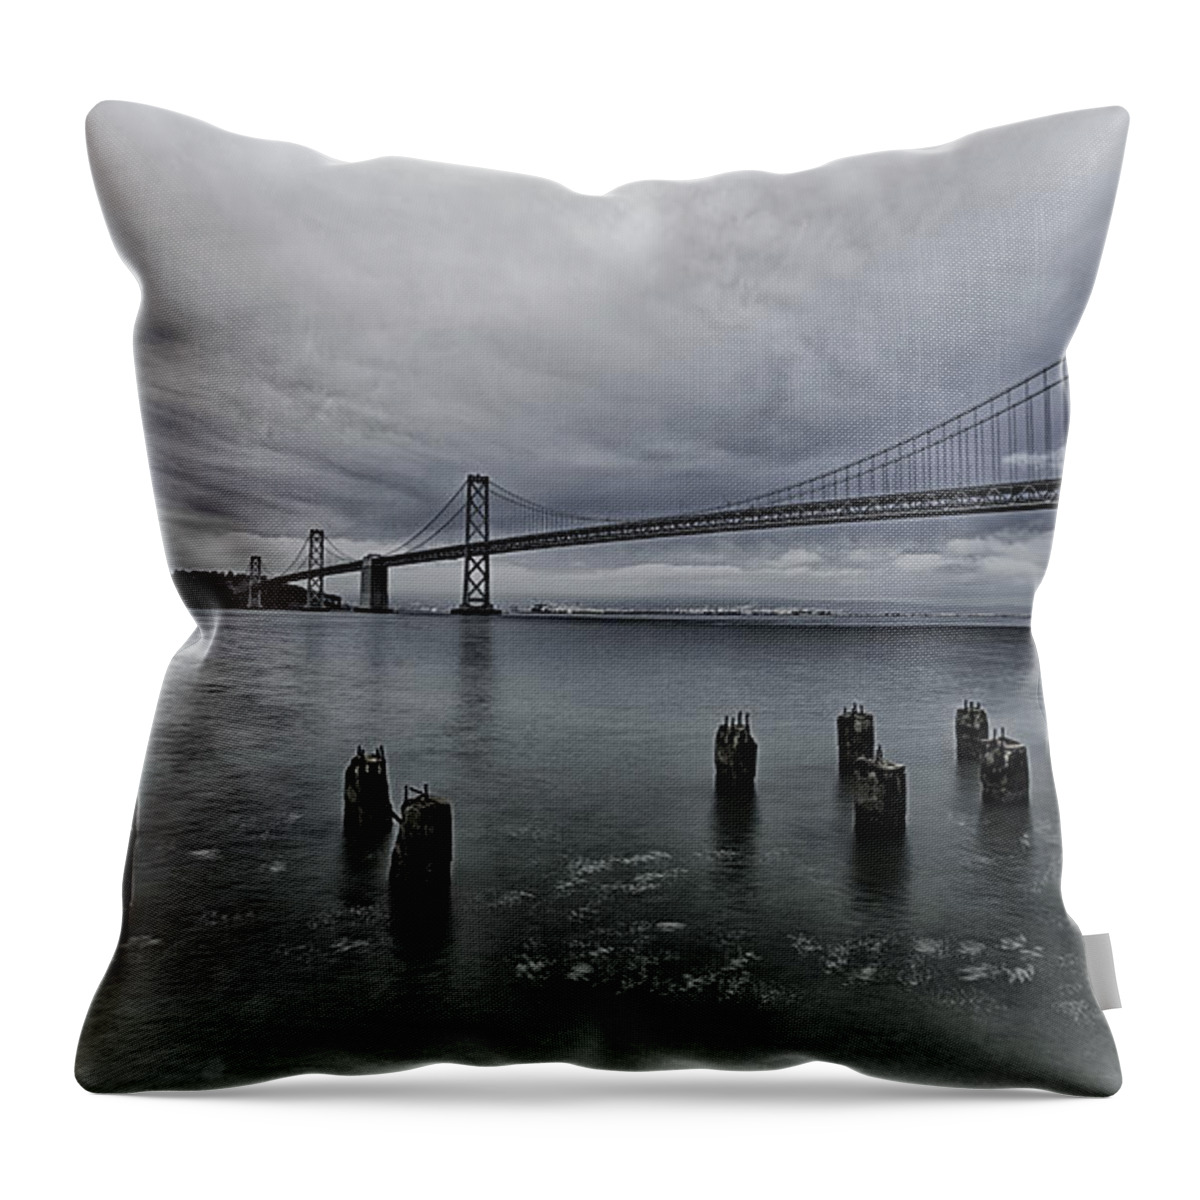 San Francisco Throw Pillow featuring the photograph Bay Bridge by Chris Cousins